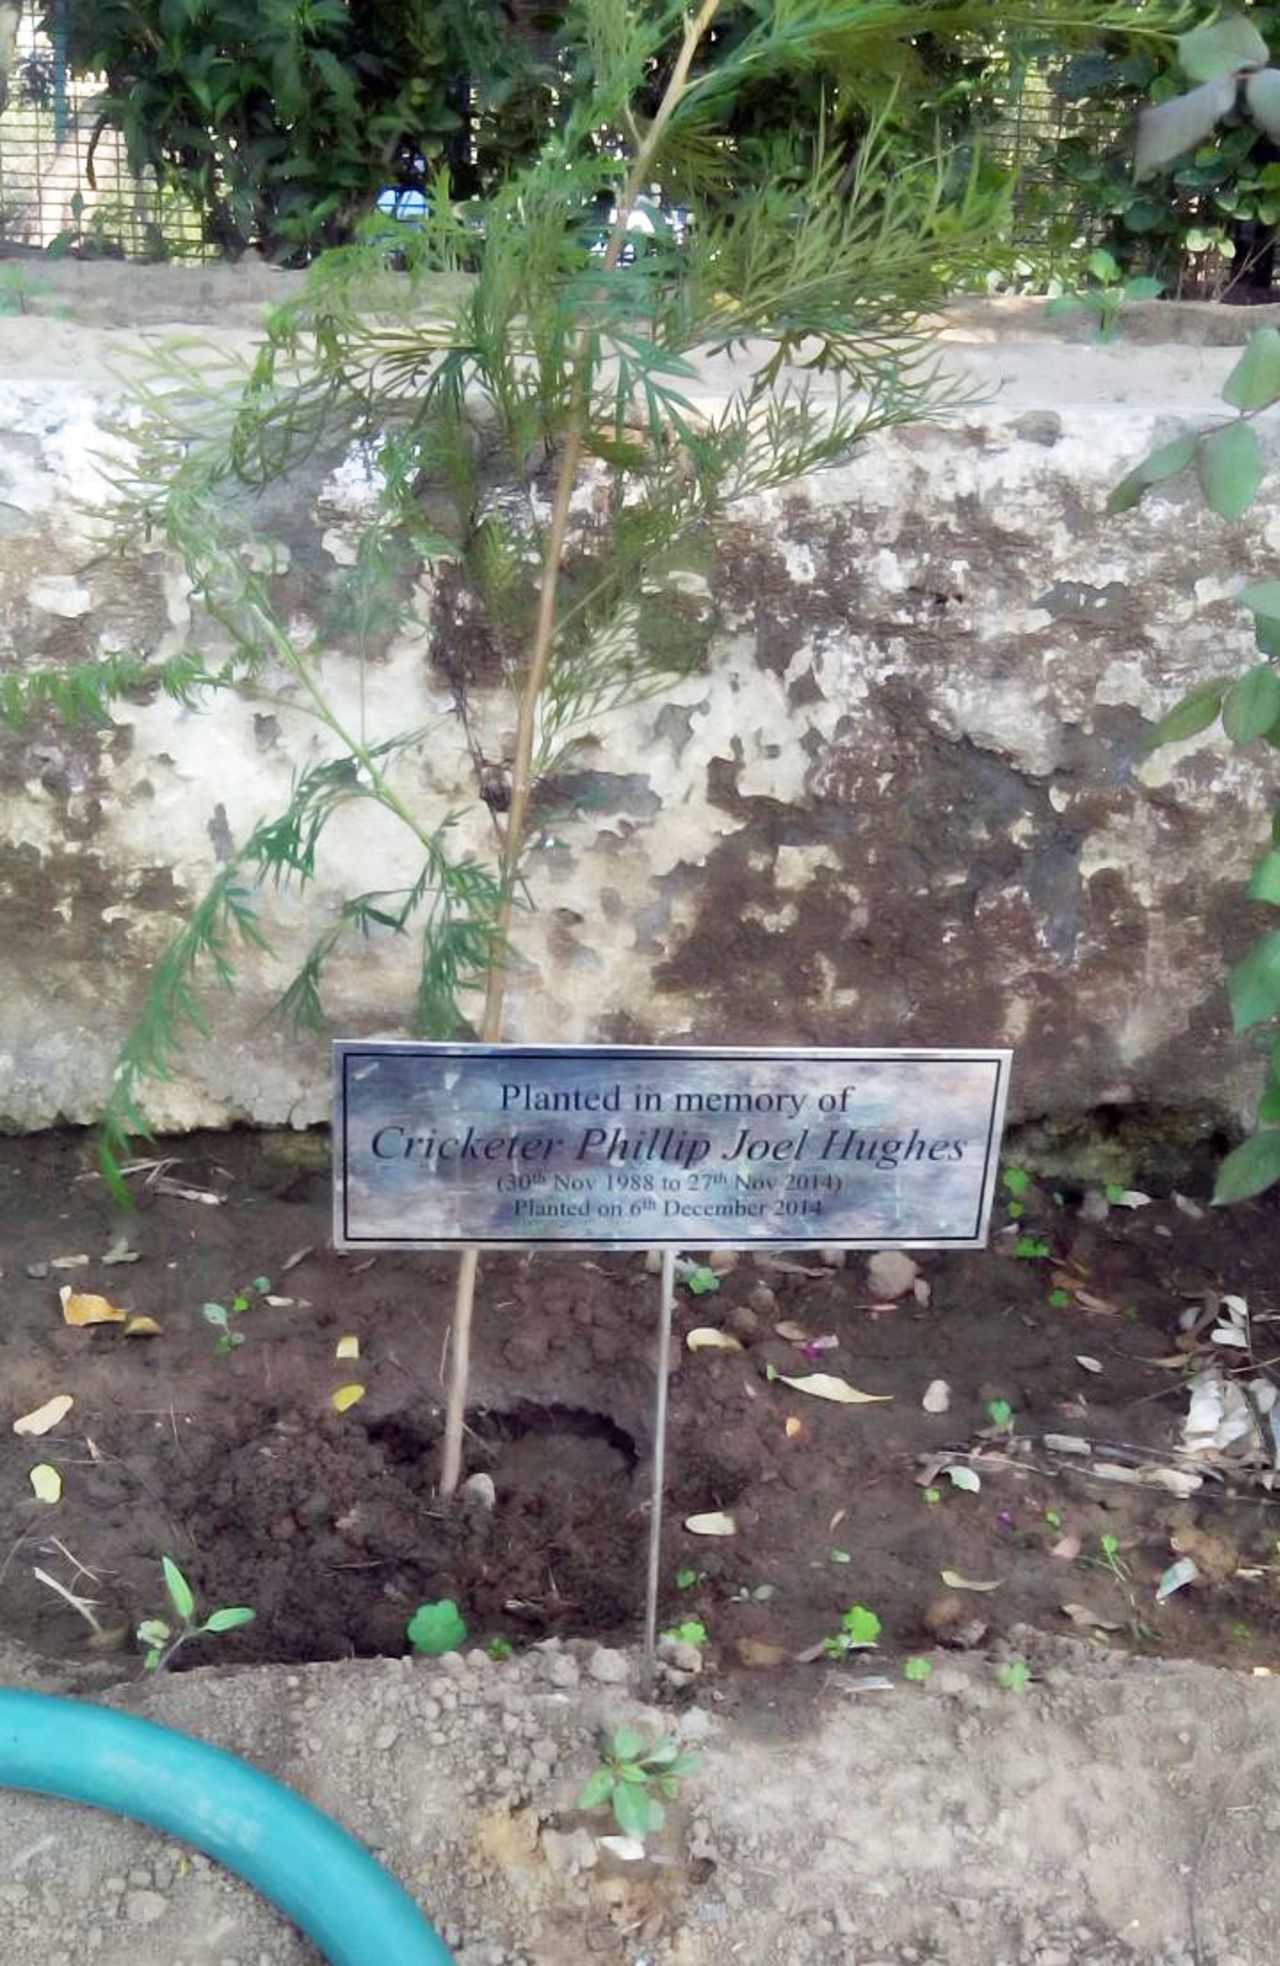 The sapling planted by Gautam Gambhir in memory of Phillip Hughes at the Roshanara Cricket Ground, Delhi, December 7, 2014